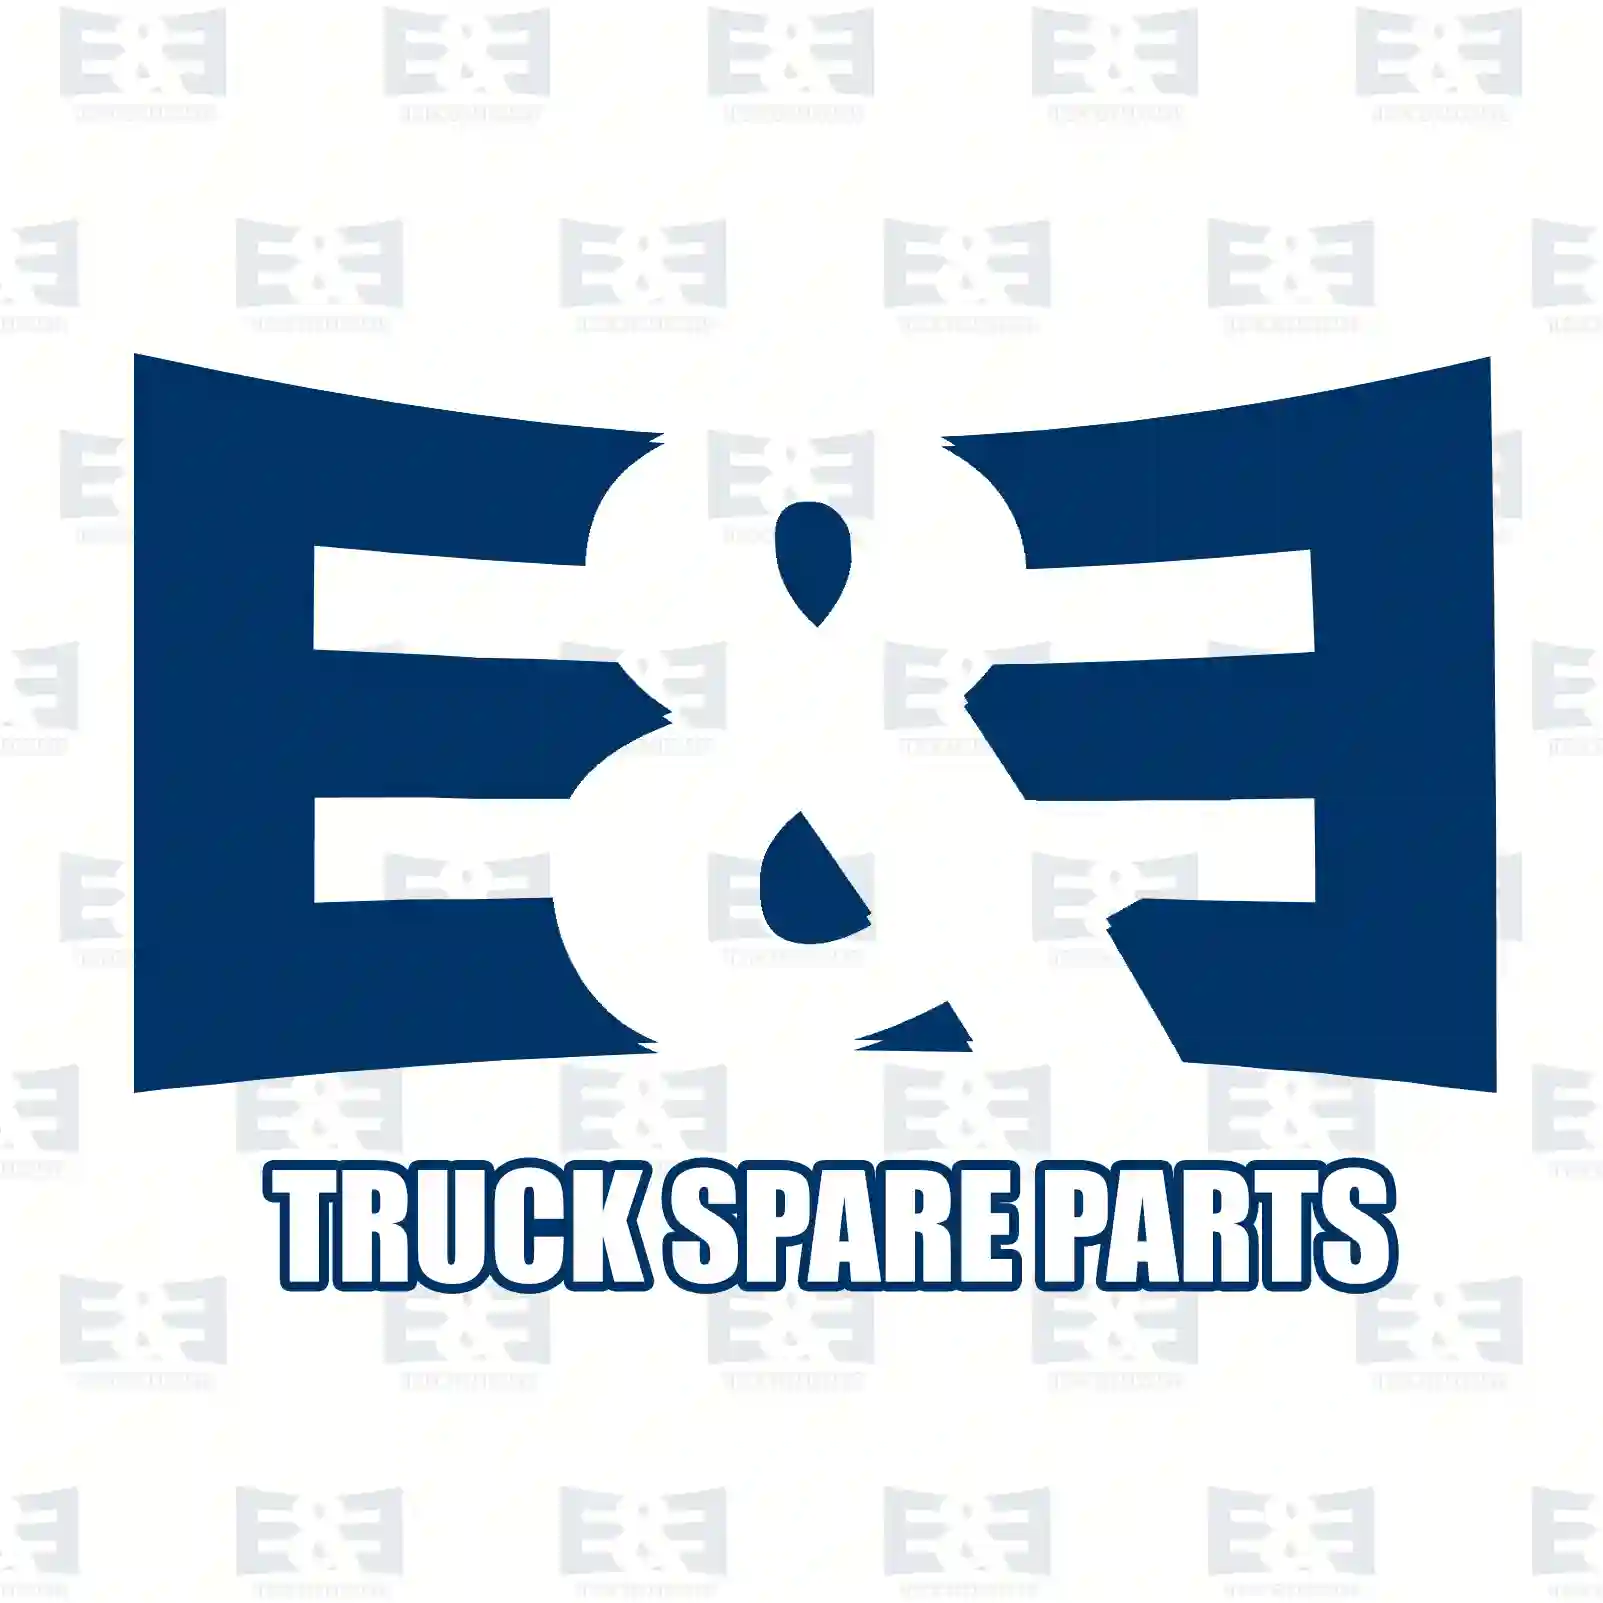  Crown wheel & pinion || E&E Truck Spare Parts | Truck Spare Parts, Auotomotive Spare Parts